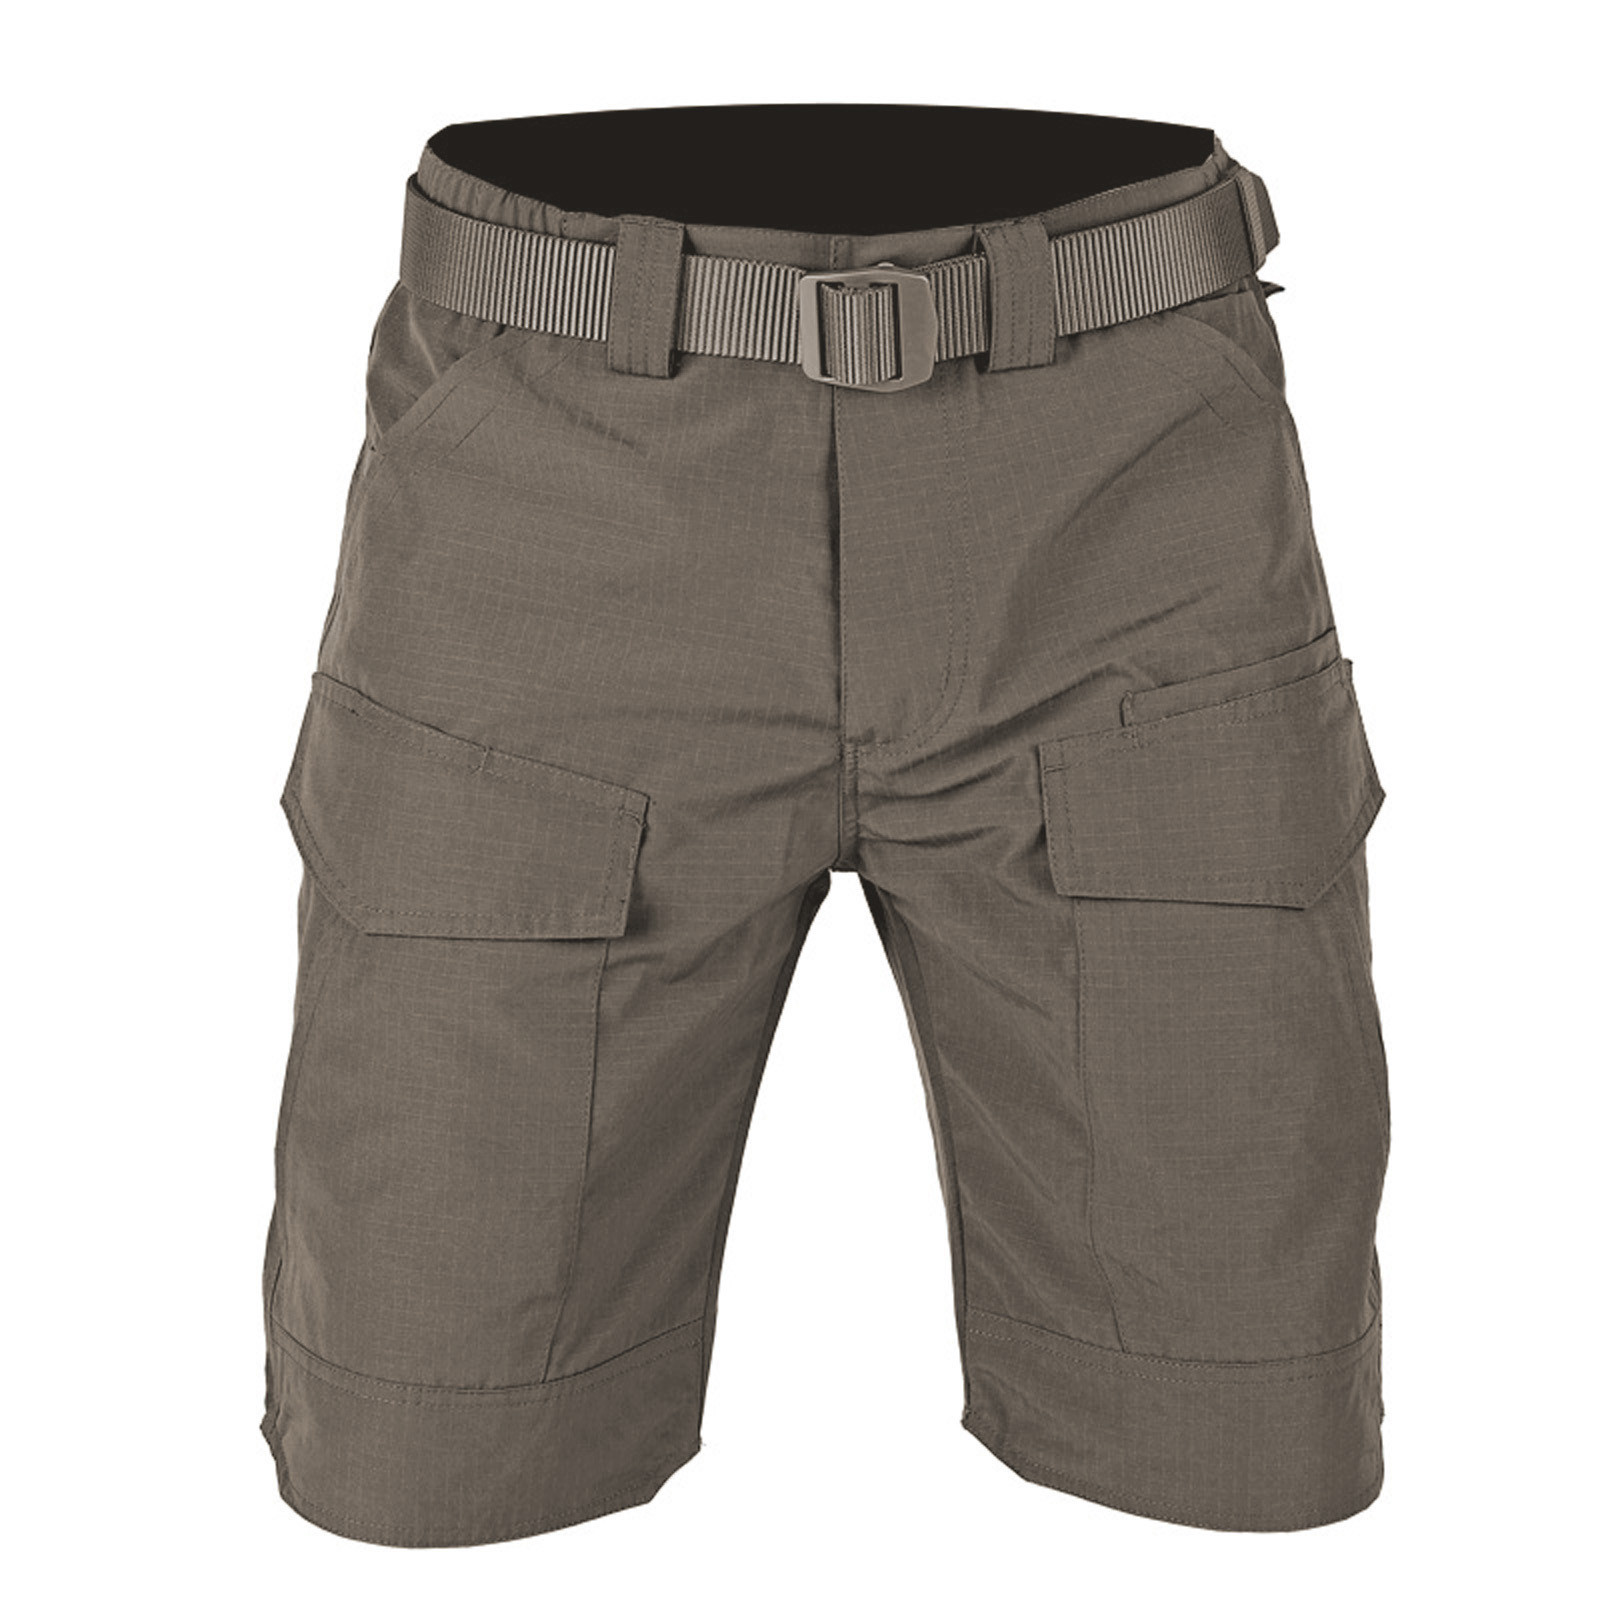 Men's Cargo Shorts Multi-Pocket Hiking Work Shorts Sweatpants Outdoor ...